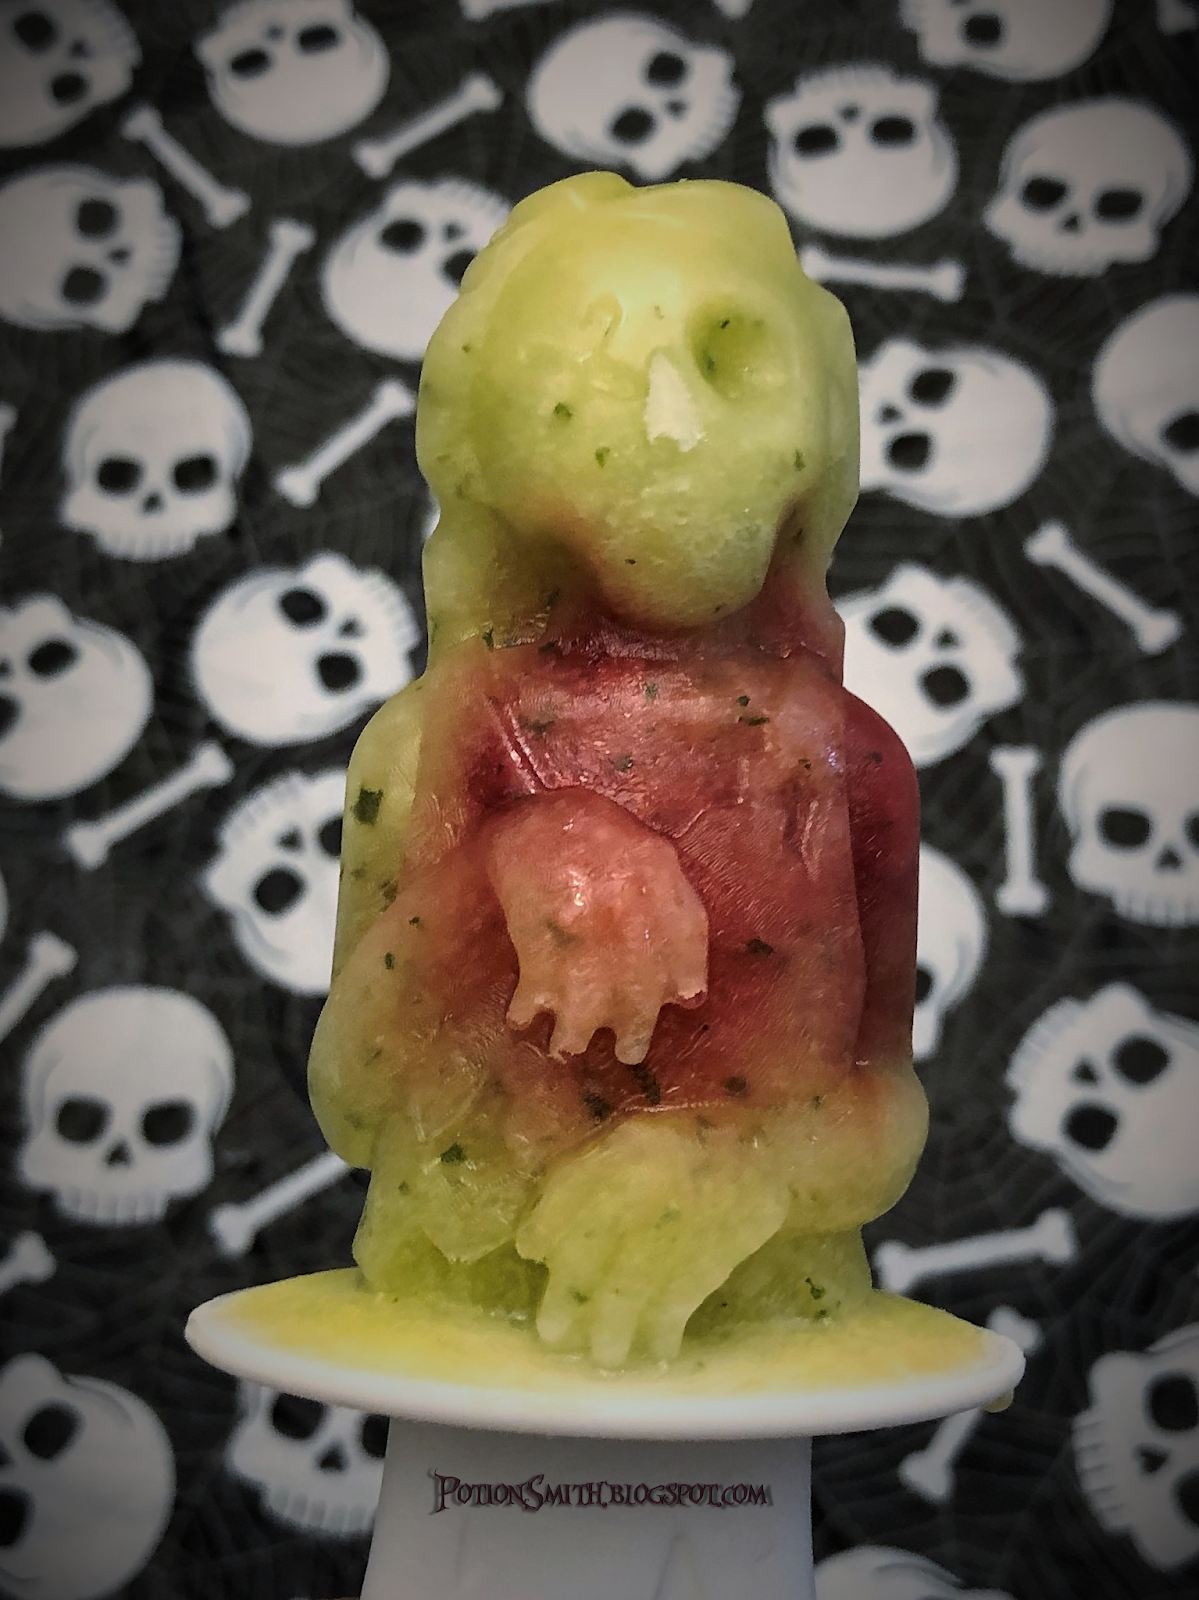 POTIONSMITH: Minty Cucumber Zombie Popsicles